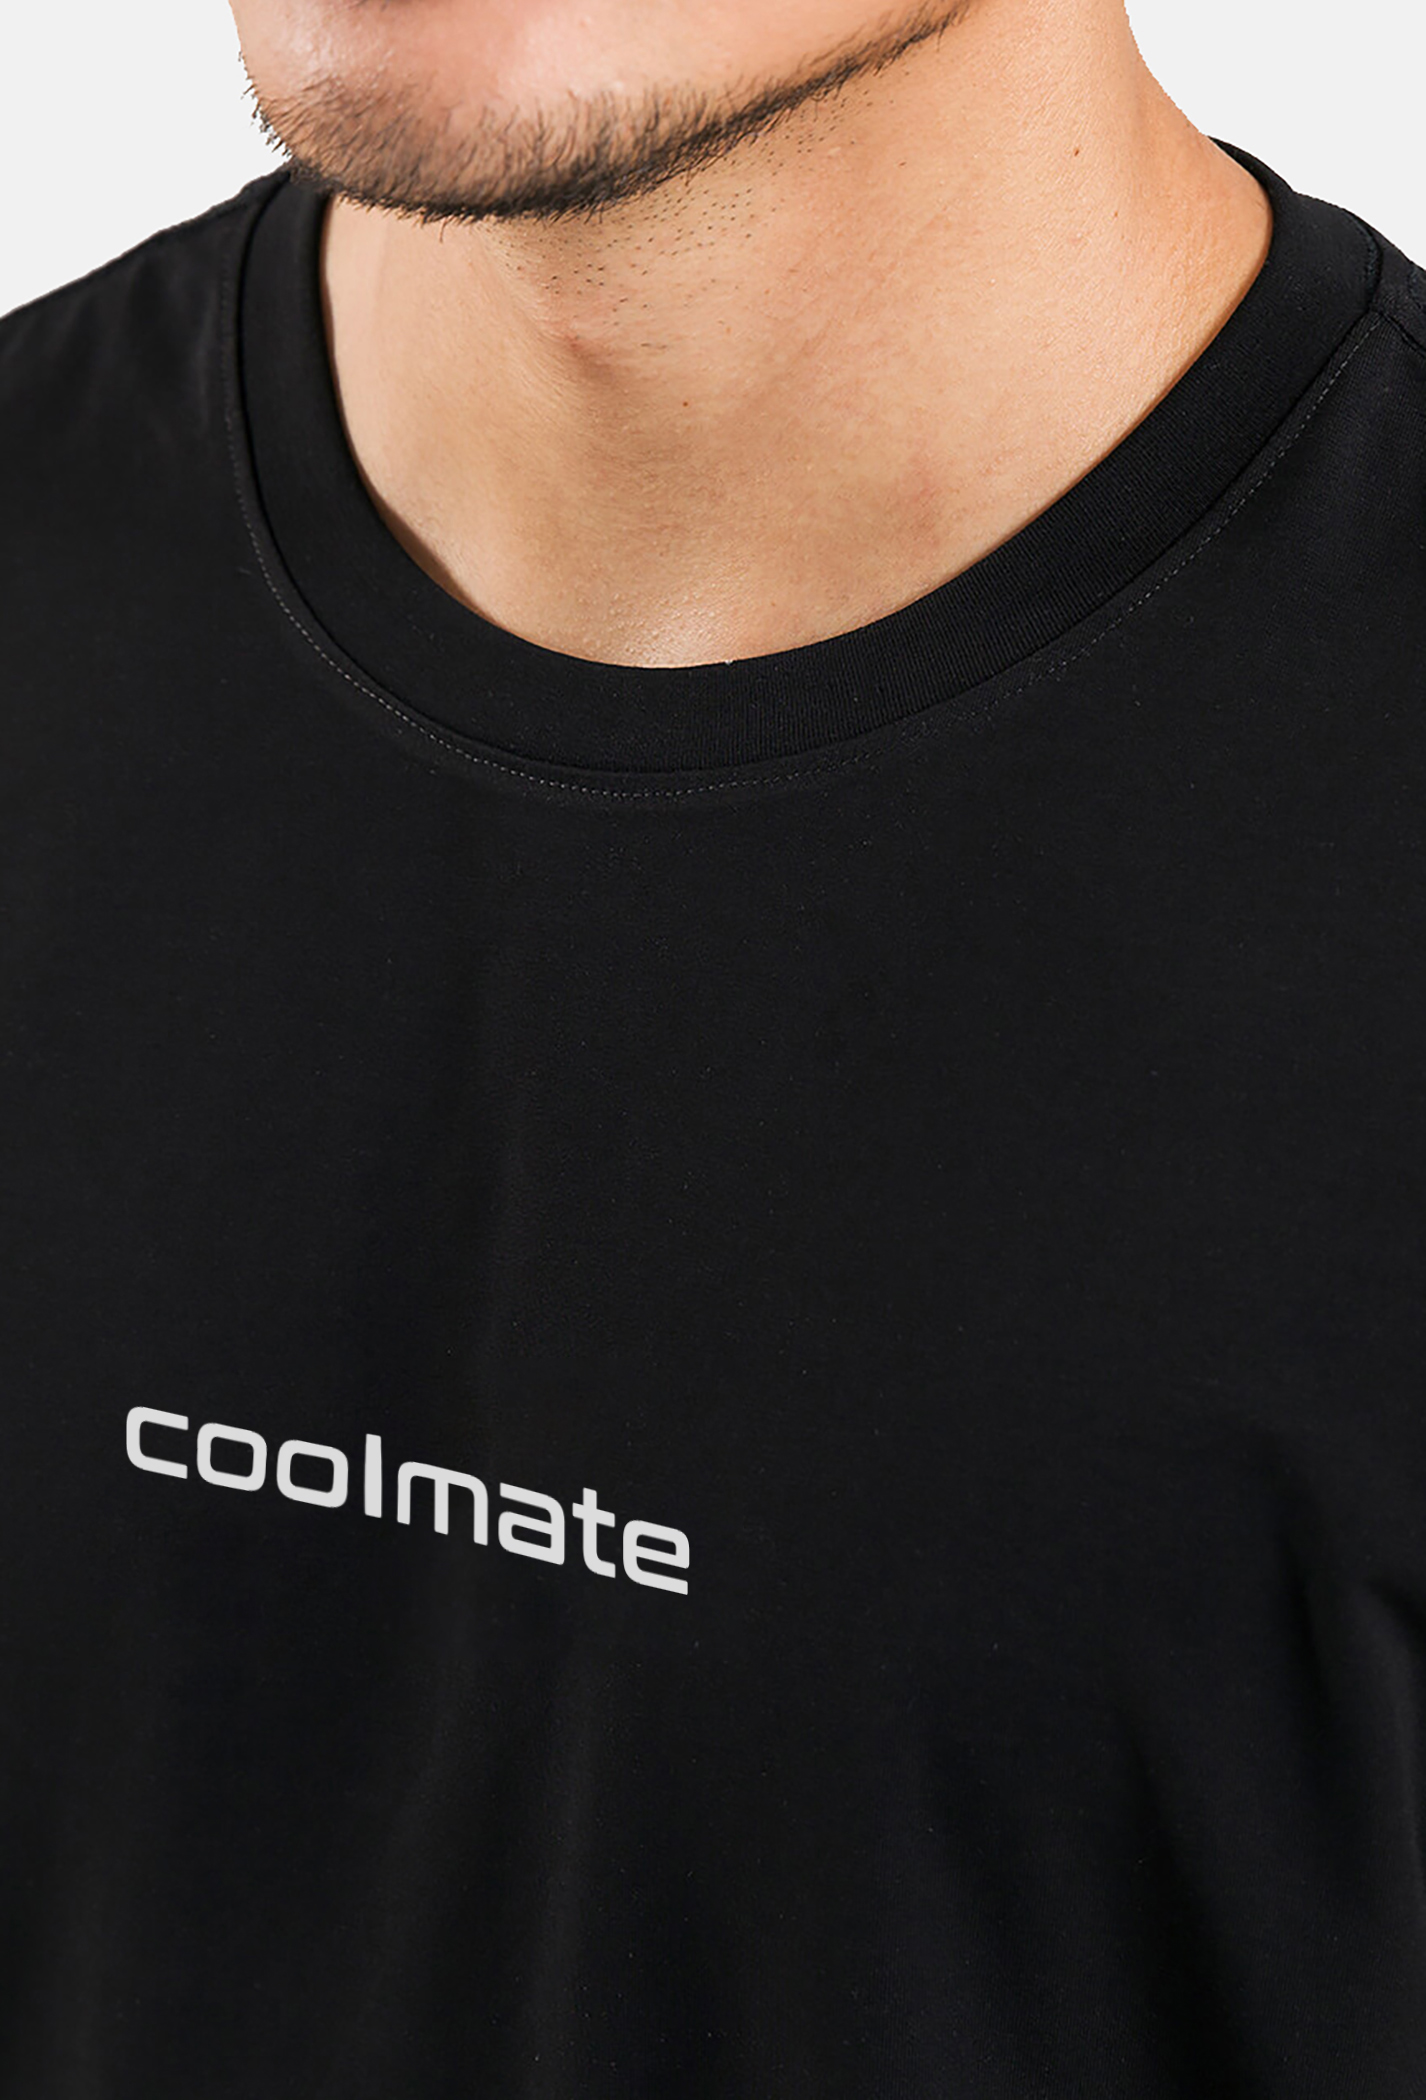 Áo thun nam in Coolmate Cotton Compact phiên bản Premium den 3